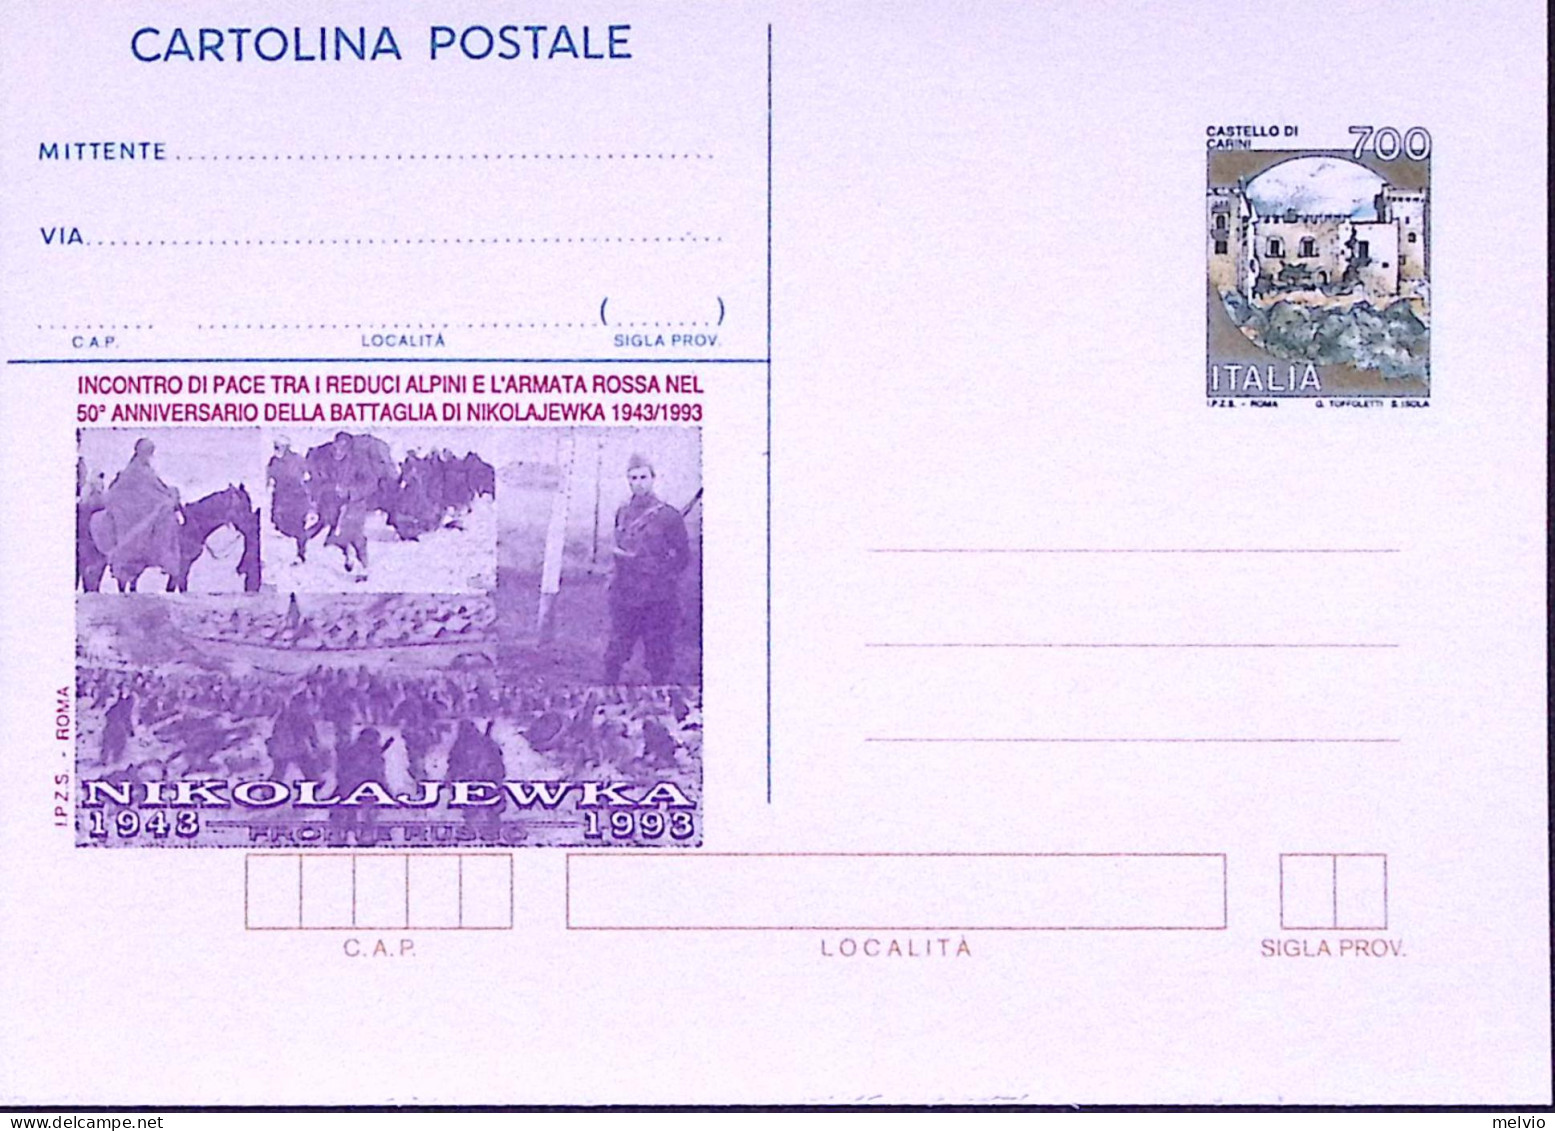 1993-BATTAGLIA DI NIKOLAJEWKA Cartolina Postale Castelli Lire 700, Nuova - Ganzsachen